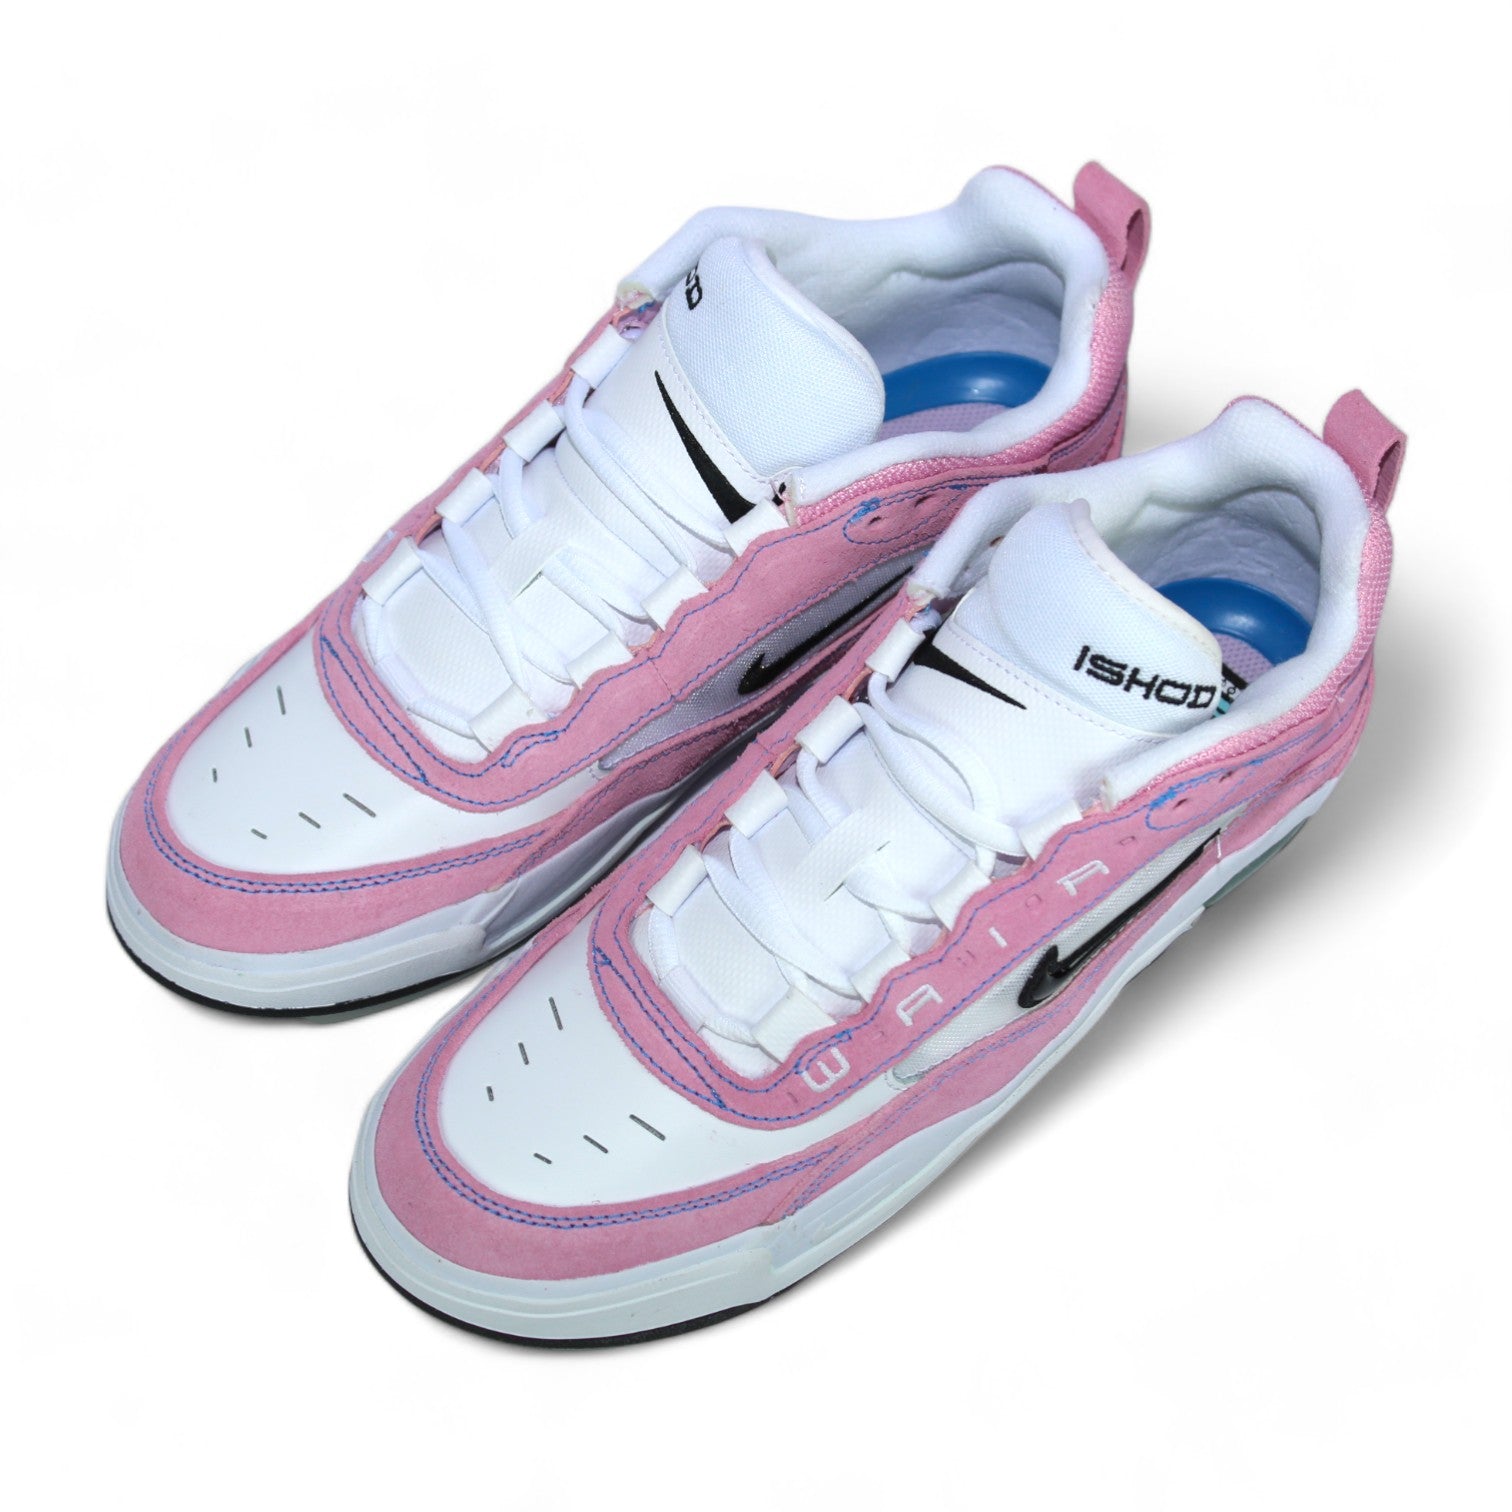 Nike SB Air Max Ishod Wair 2 - Pink Foam/White